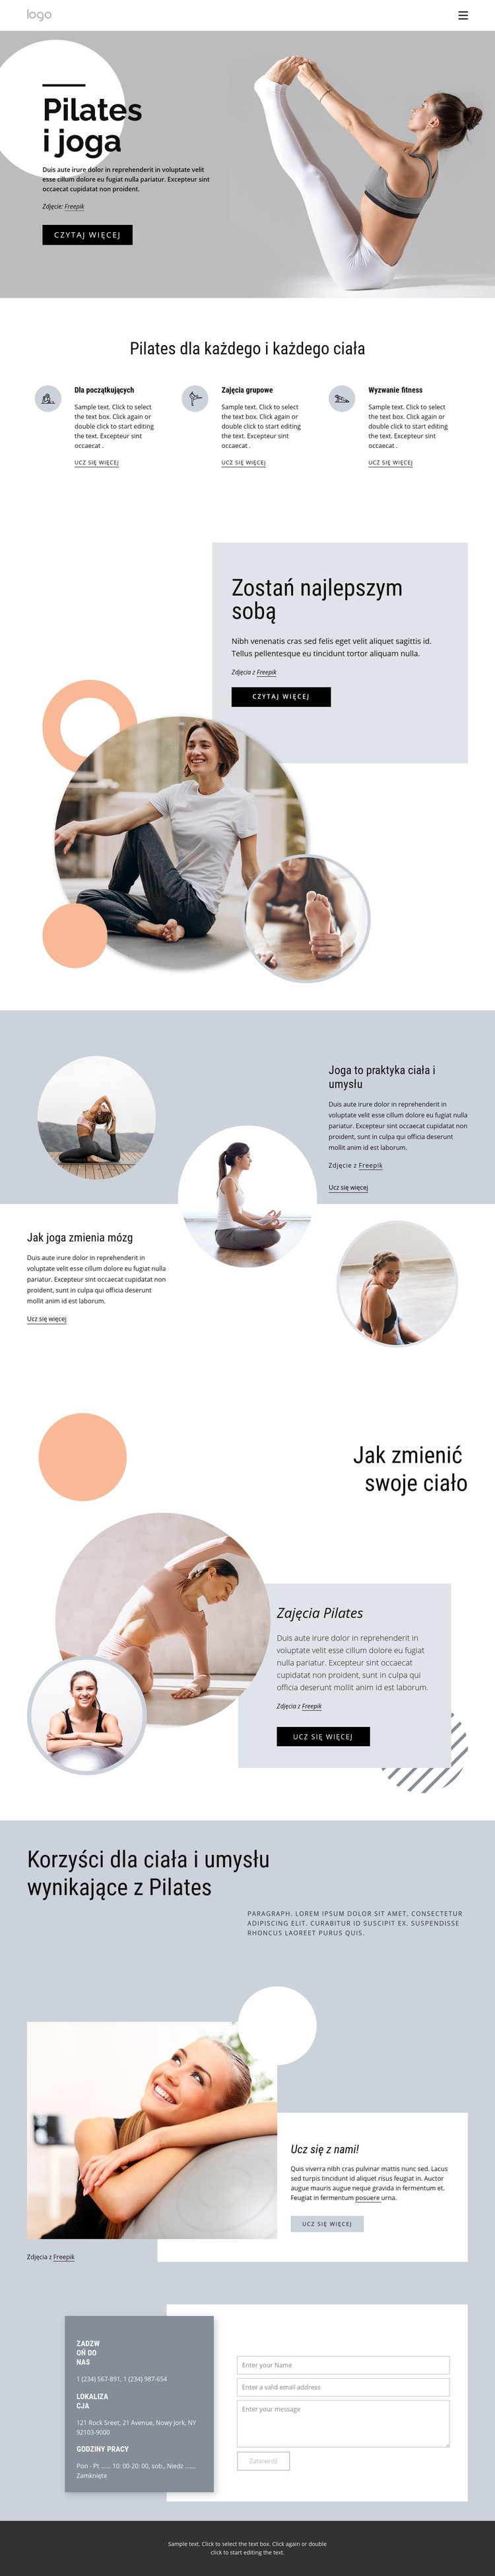 Pilates i centrum jogi Szablon HTML5